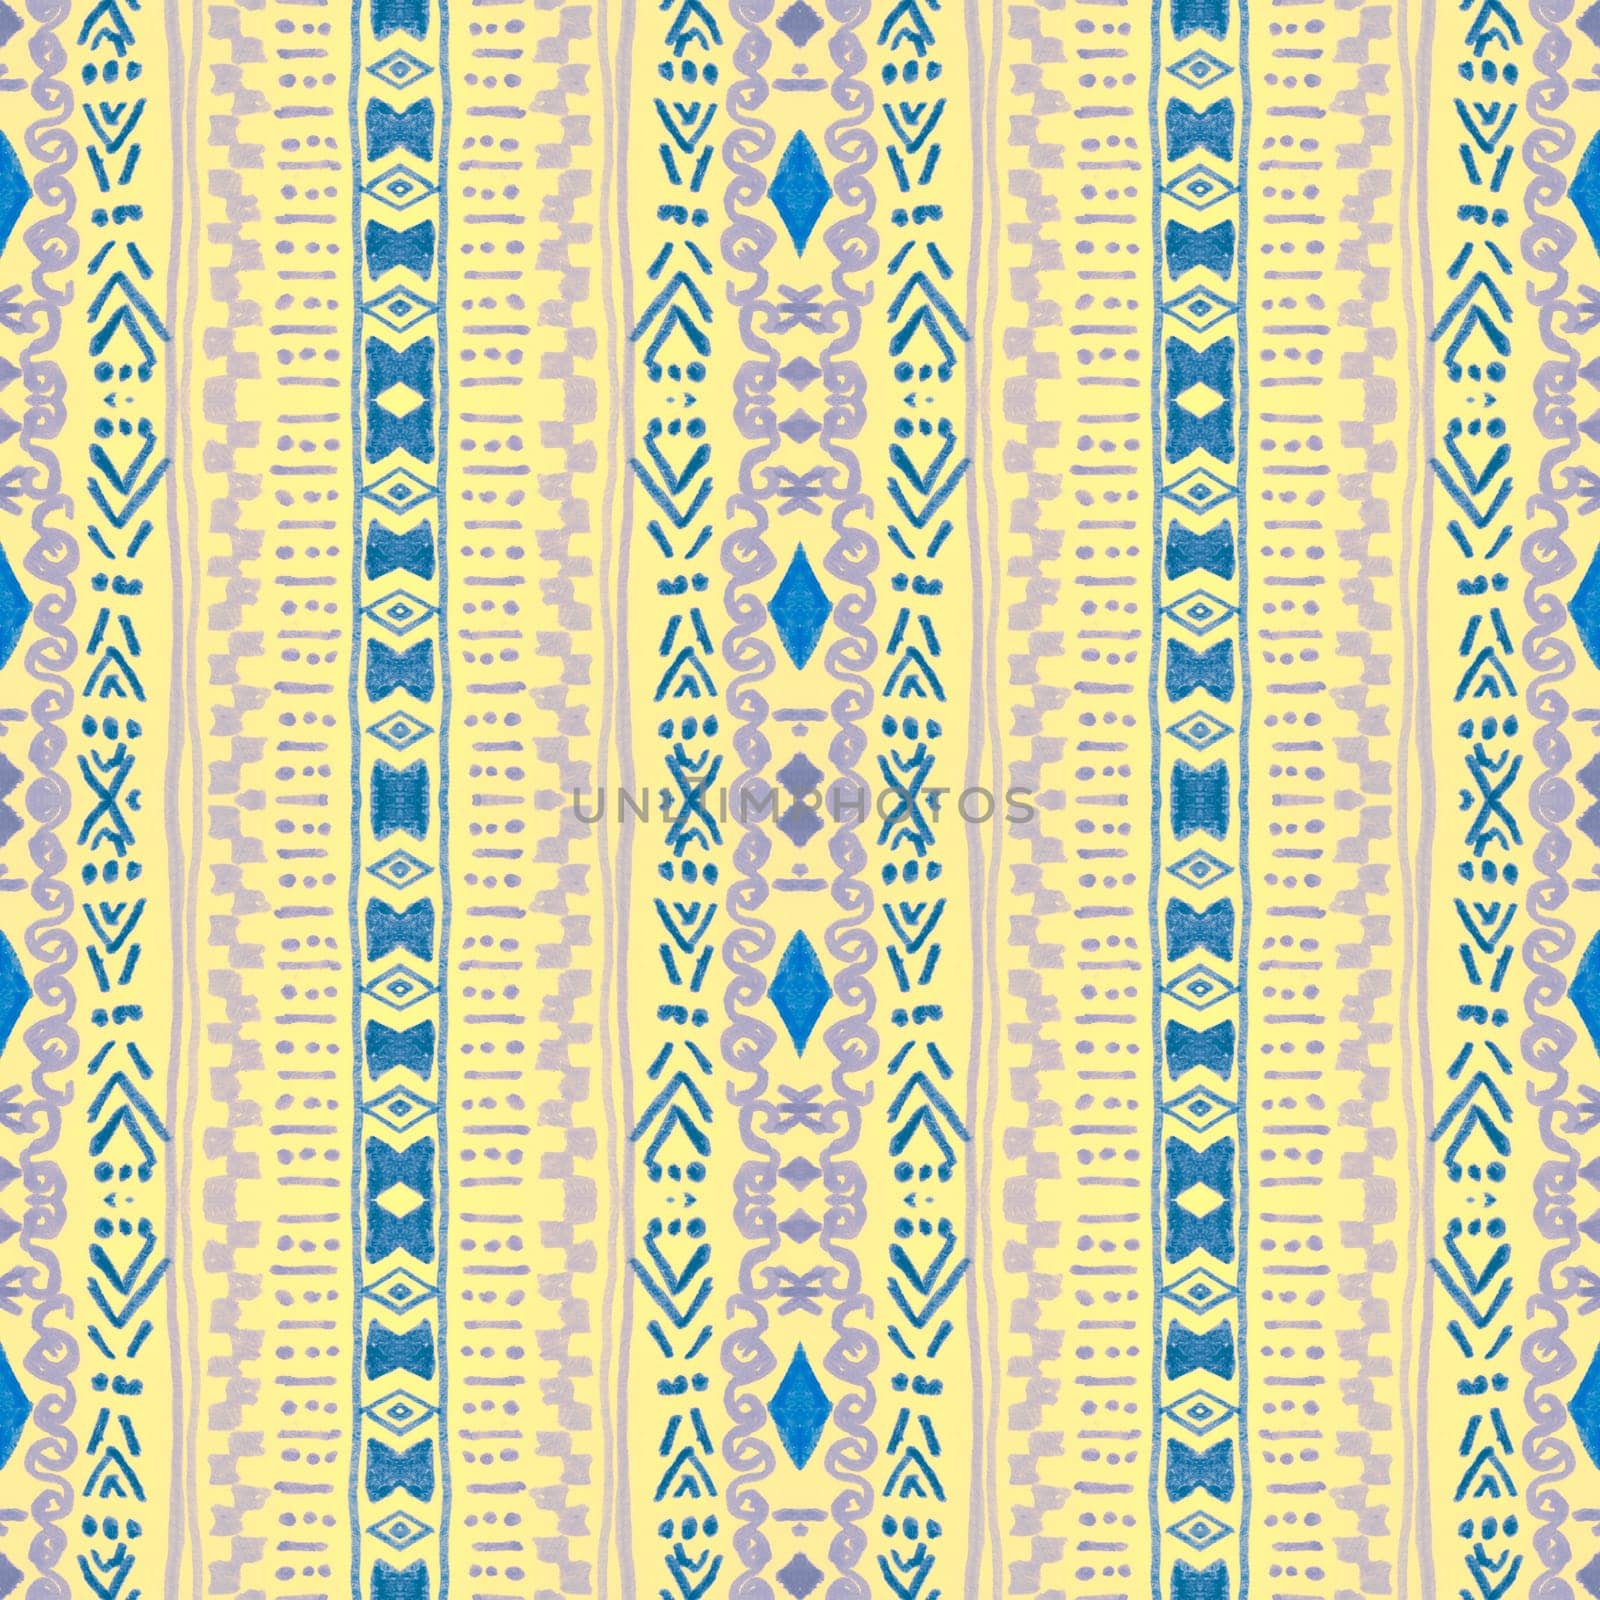 Geometric ethnic print. Grunge navajo ornament. by YASNARADA